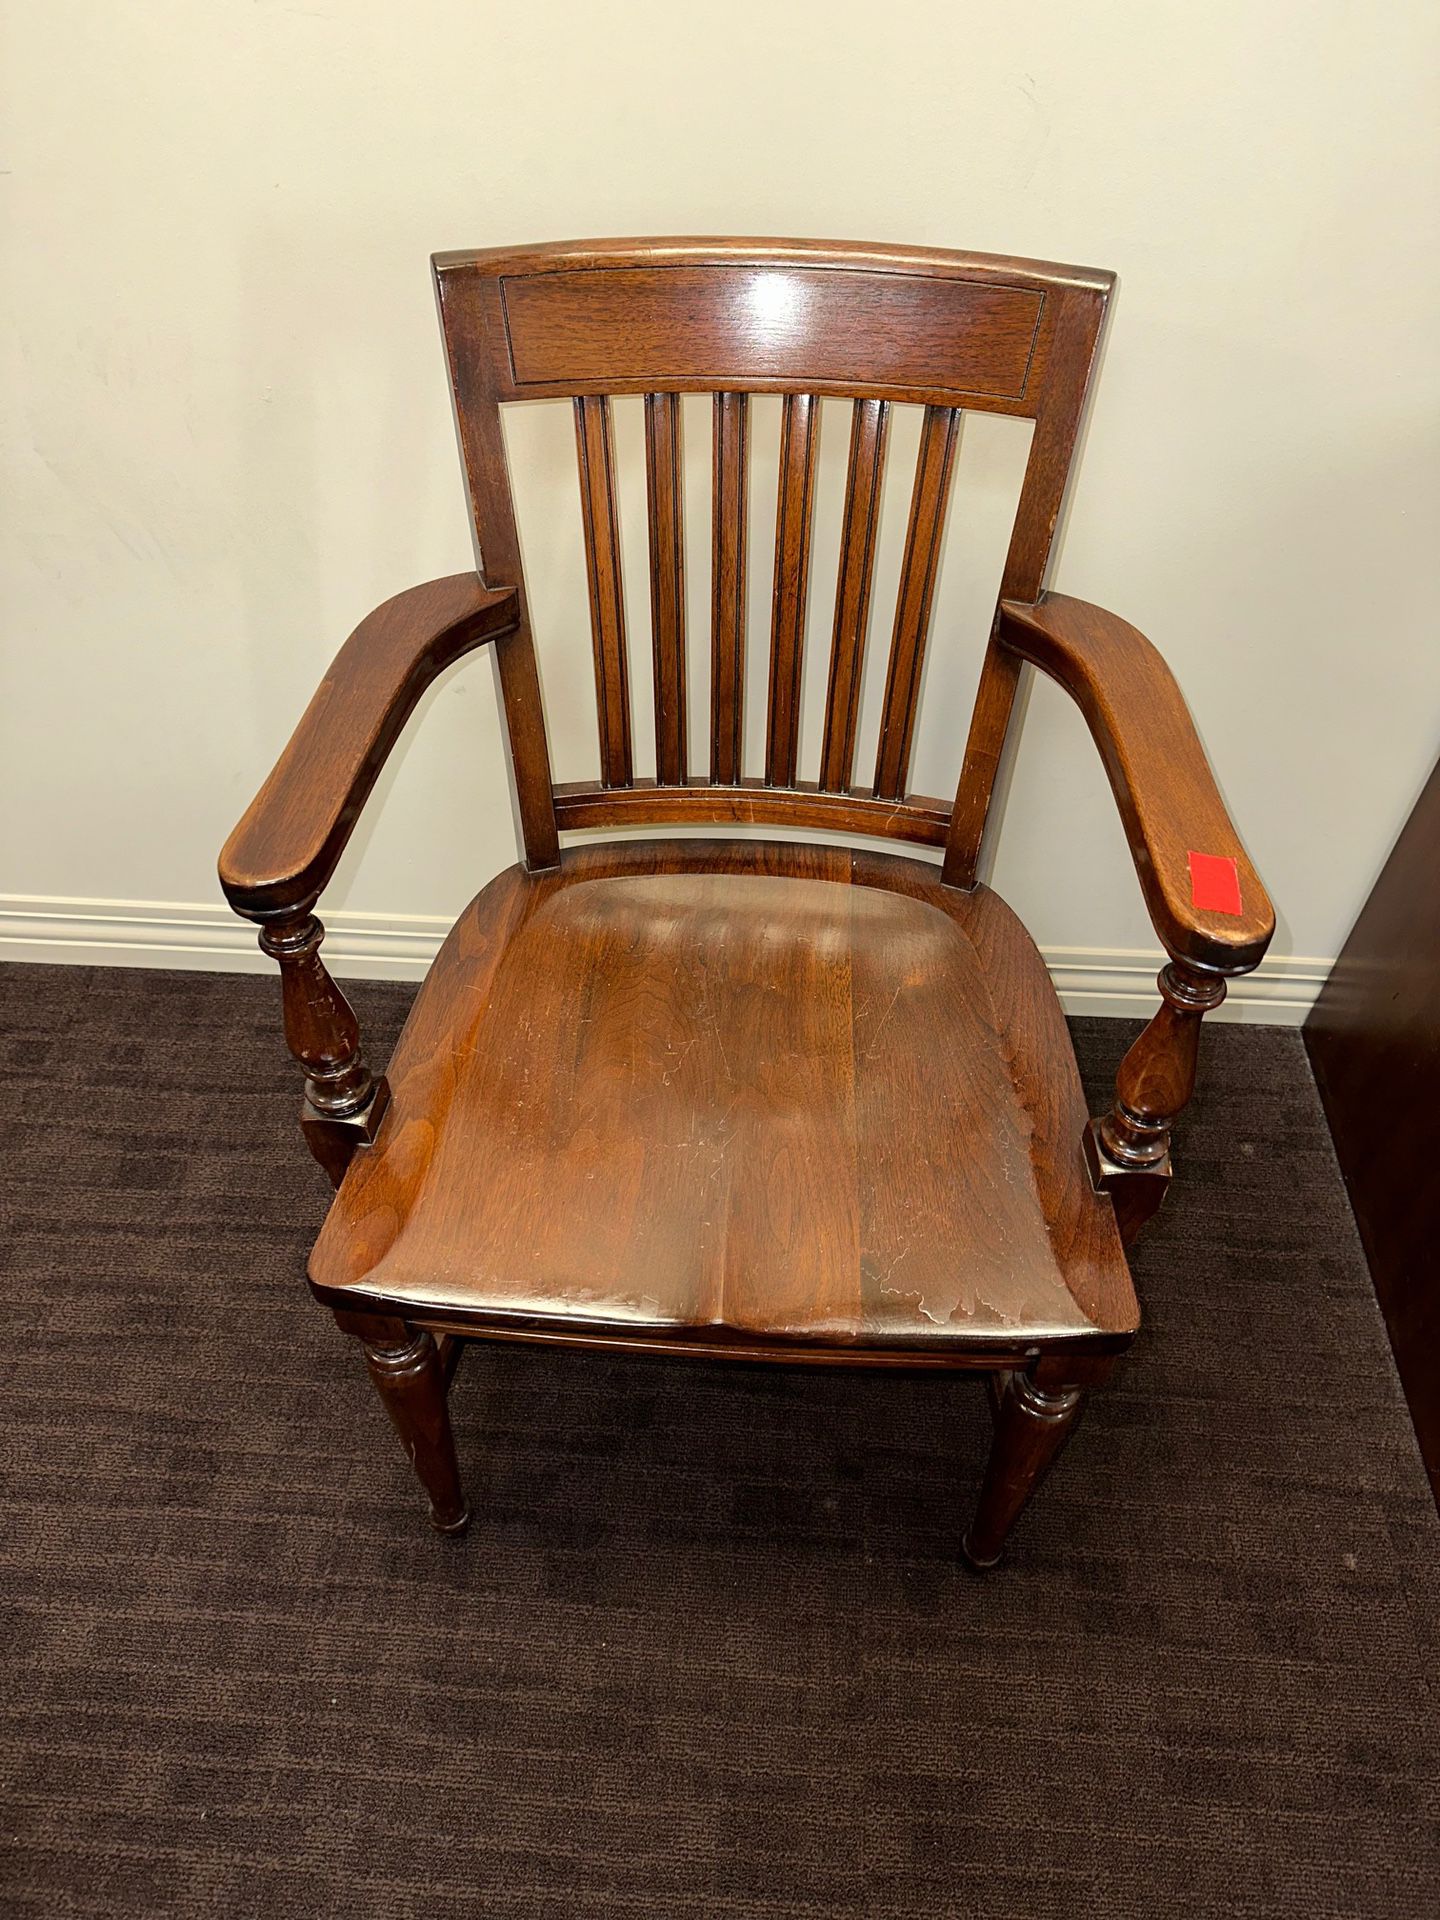 (2) B.L Marble Chair Company Ohio Desk Mahogany Armchair 22x22 34T Seat Ht 18" Like Brand New